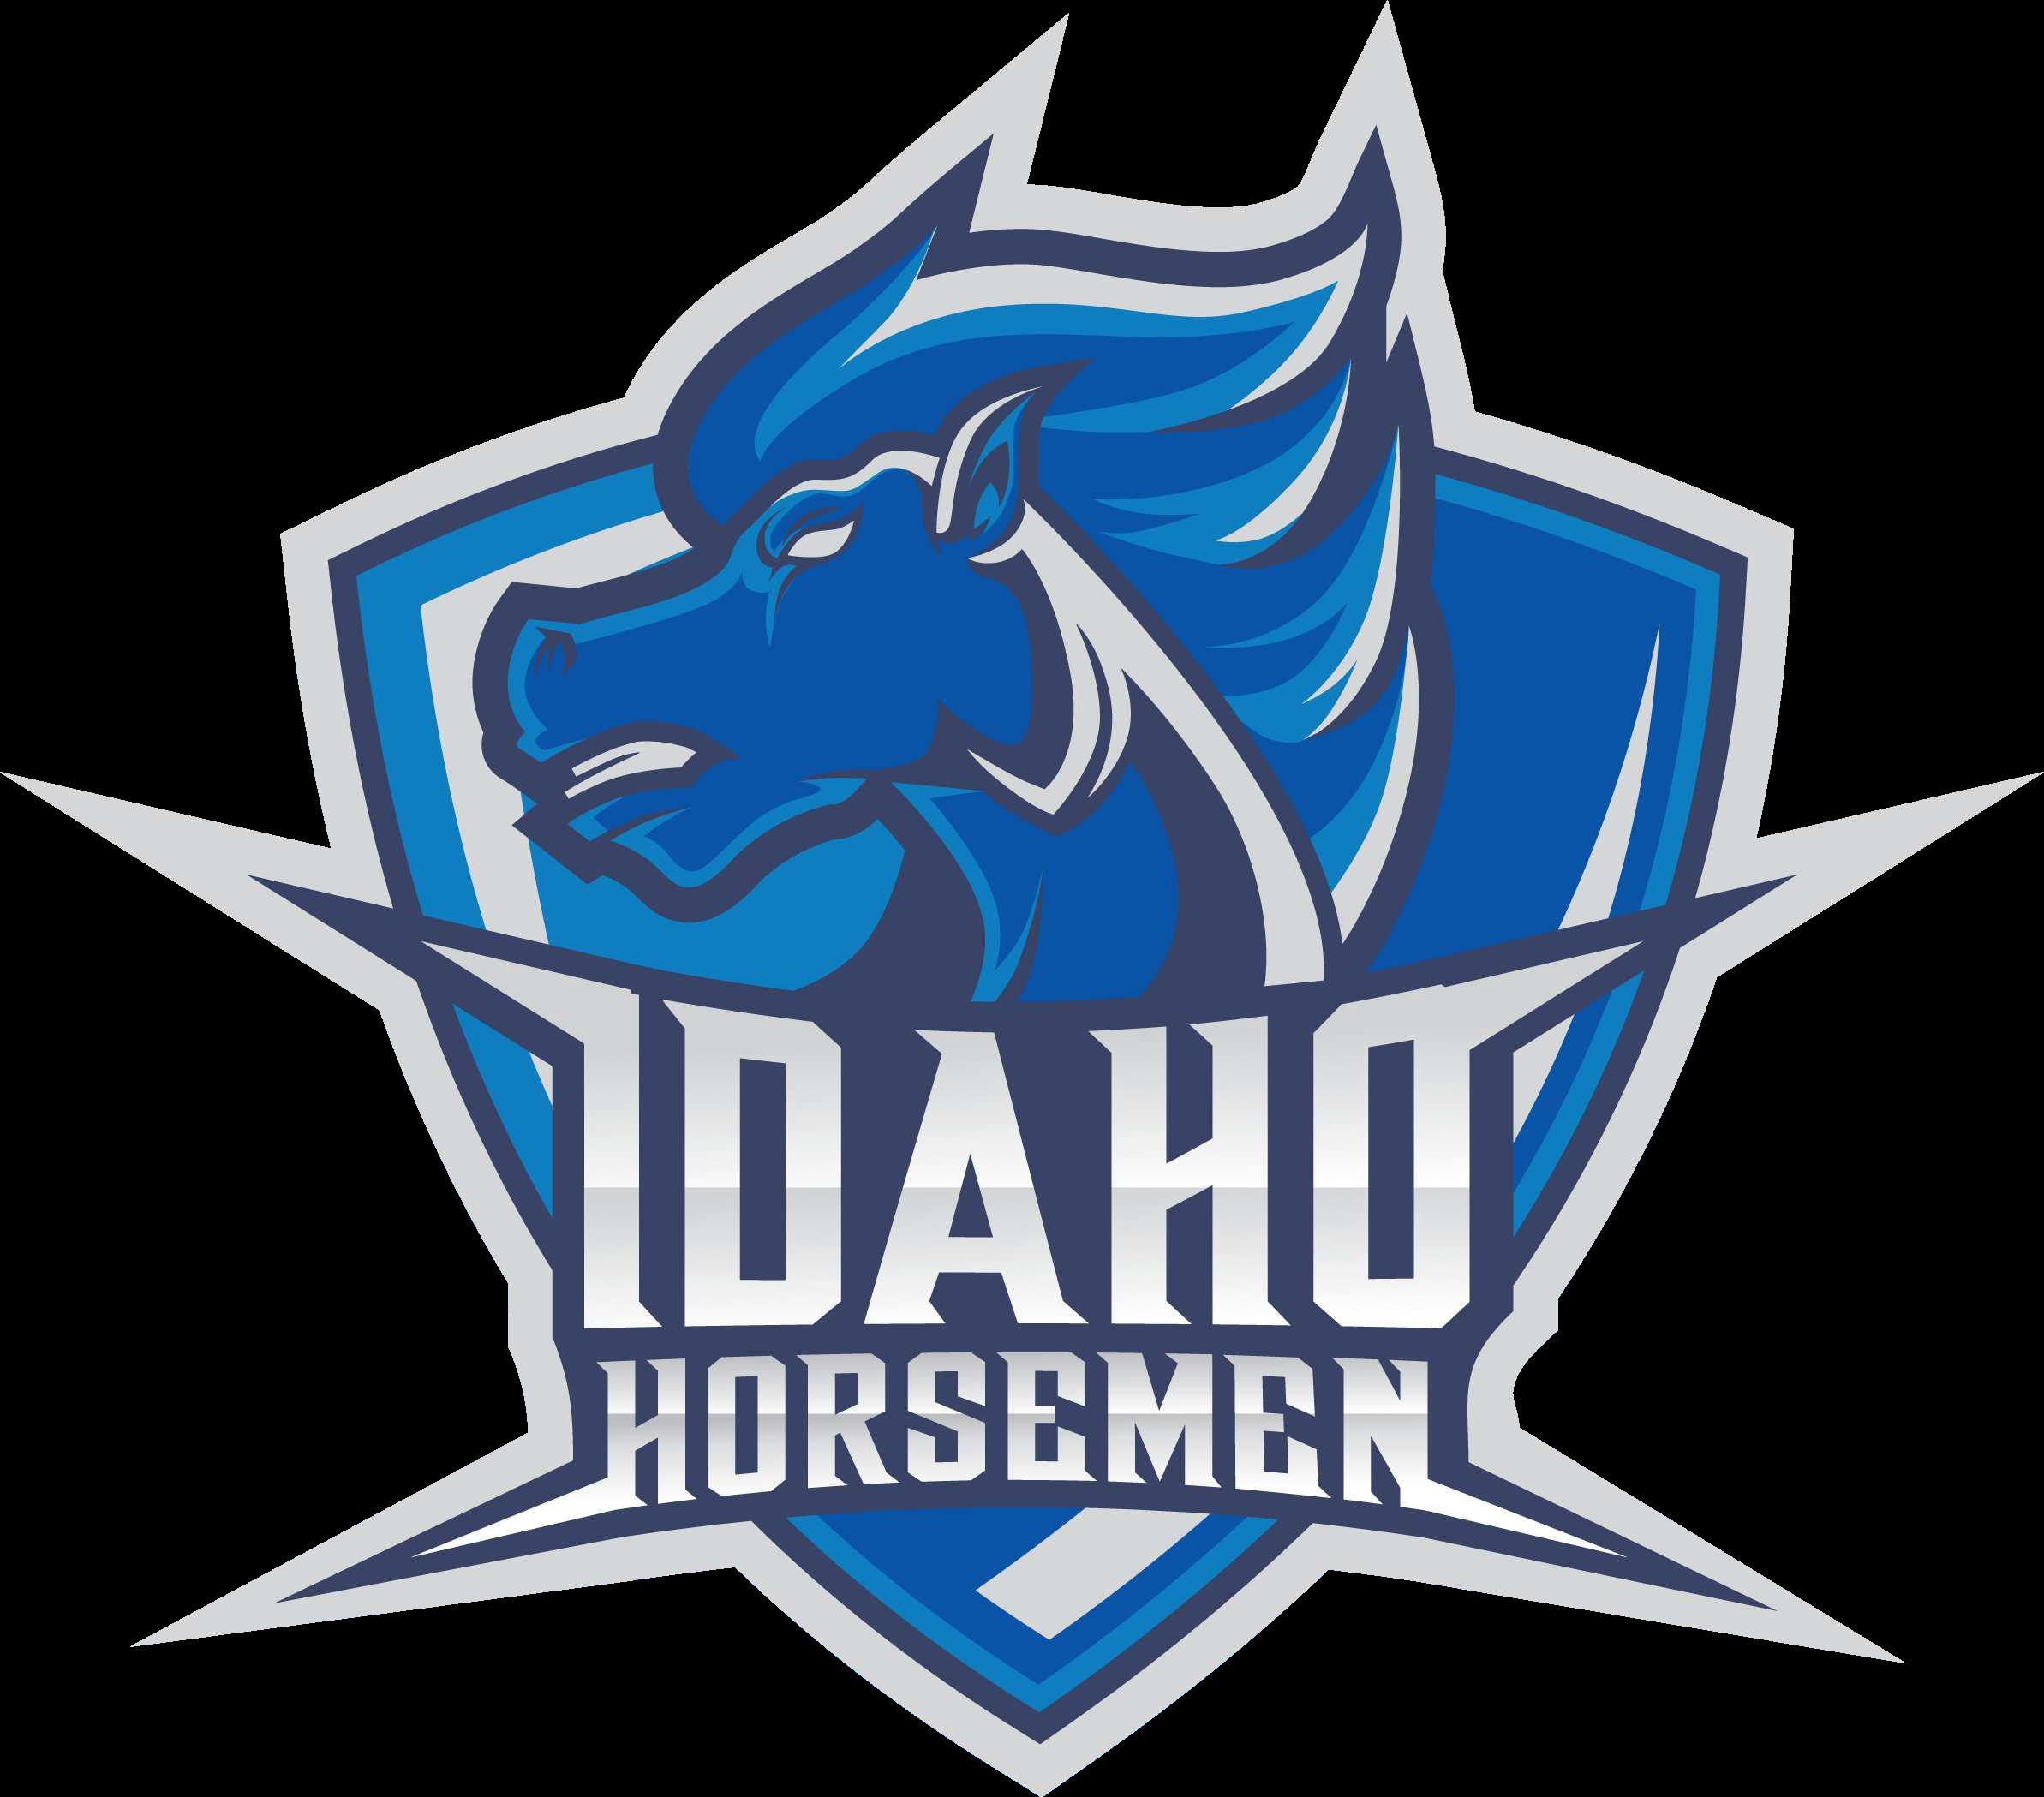 CSB Logo - CSB Boise: Idaho Horsemen Championship Game. Craig Stein Beverage